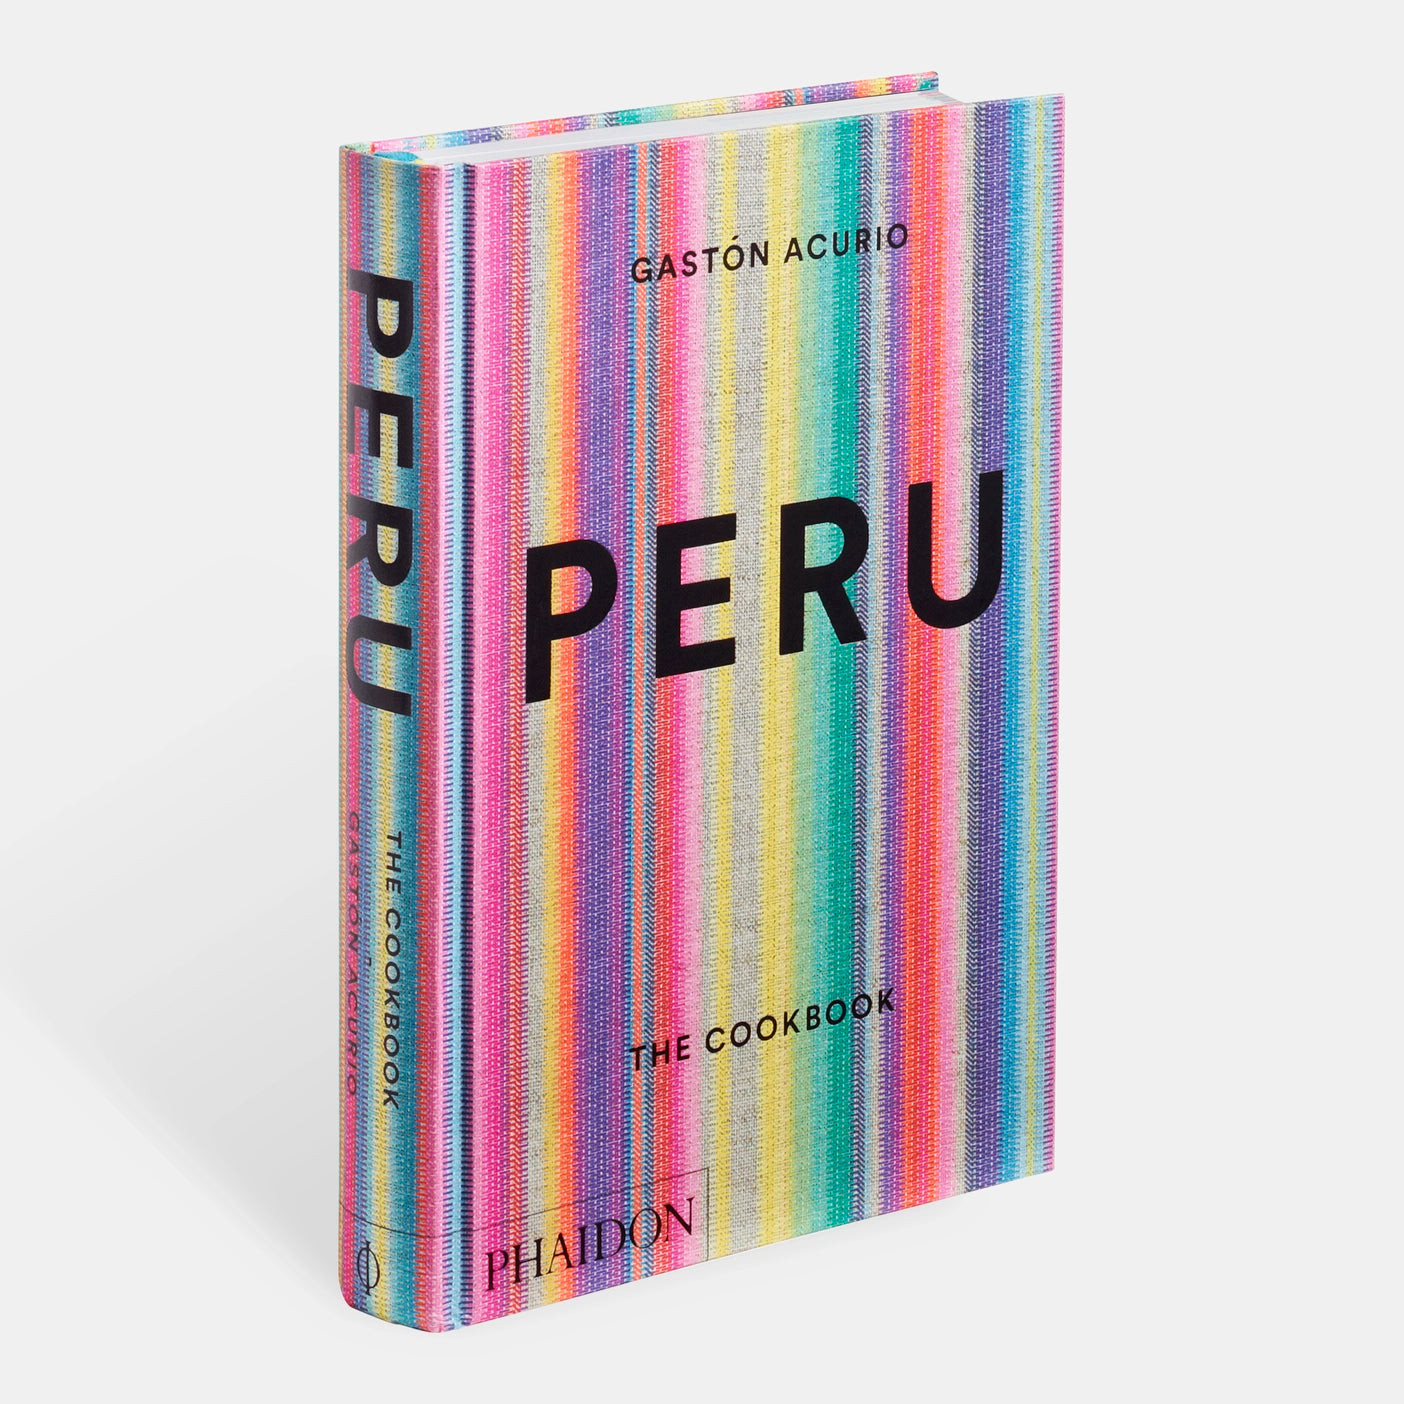 Peru: The Cookbook
Gastón Acurio